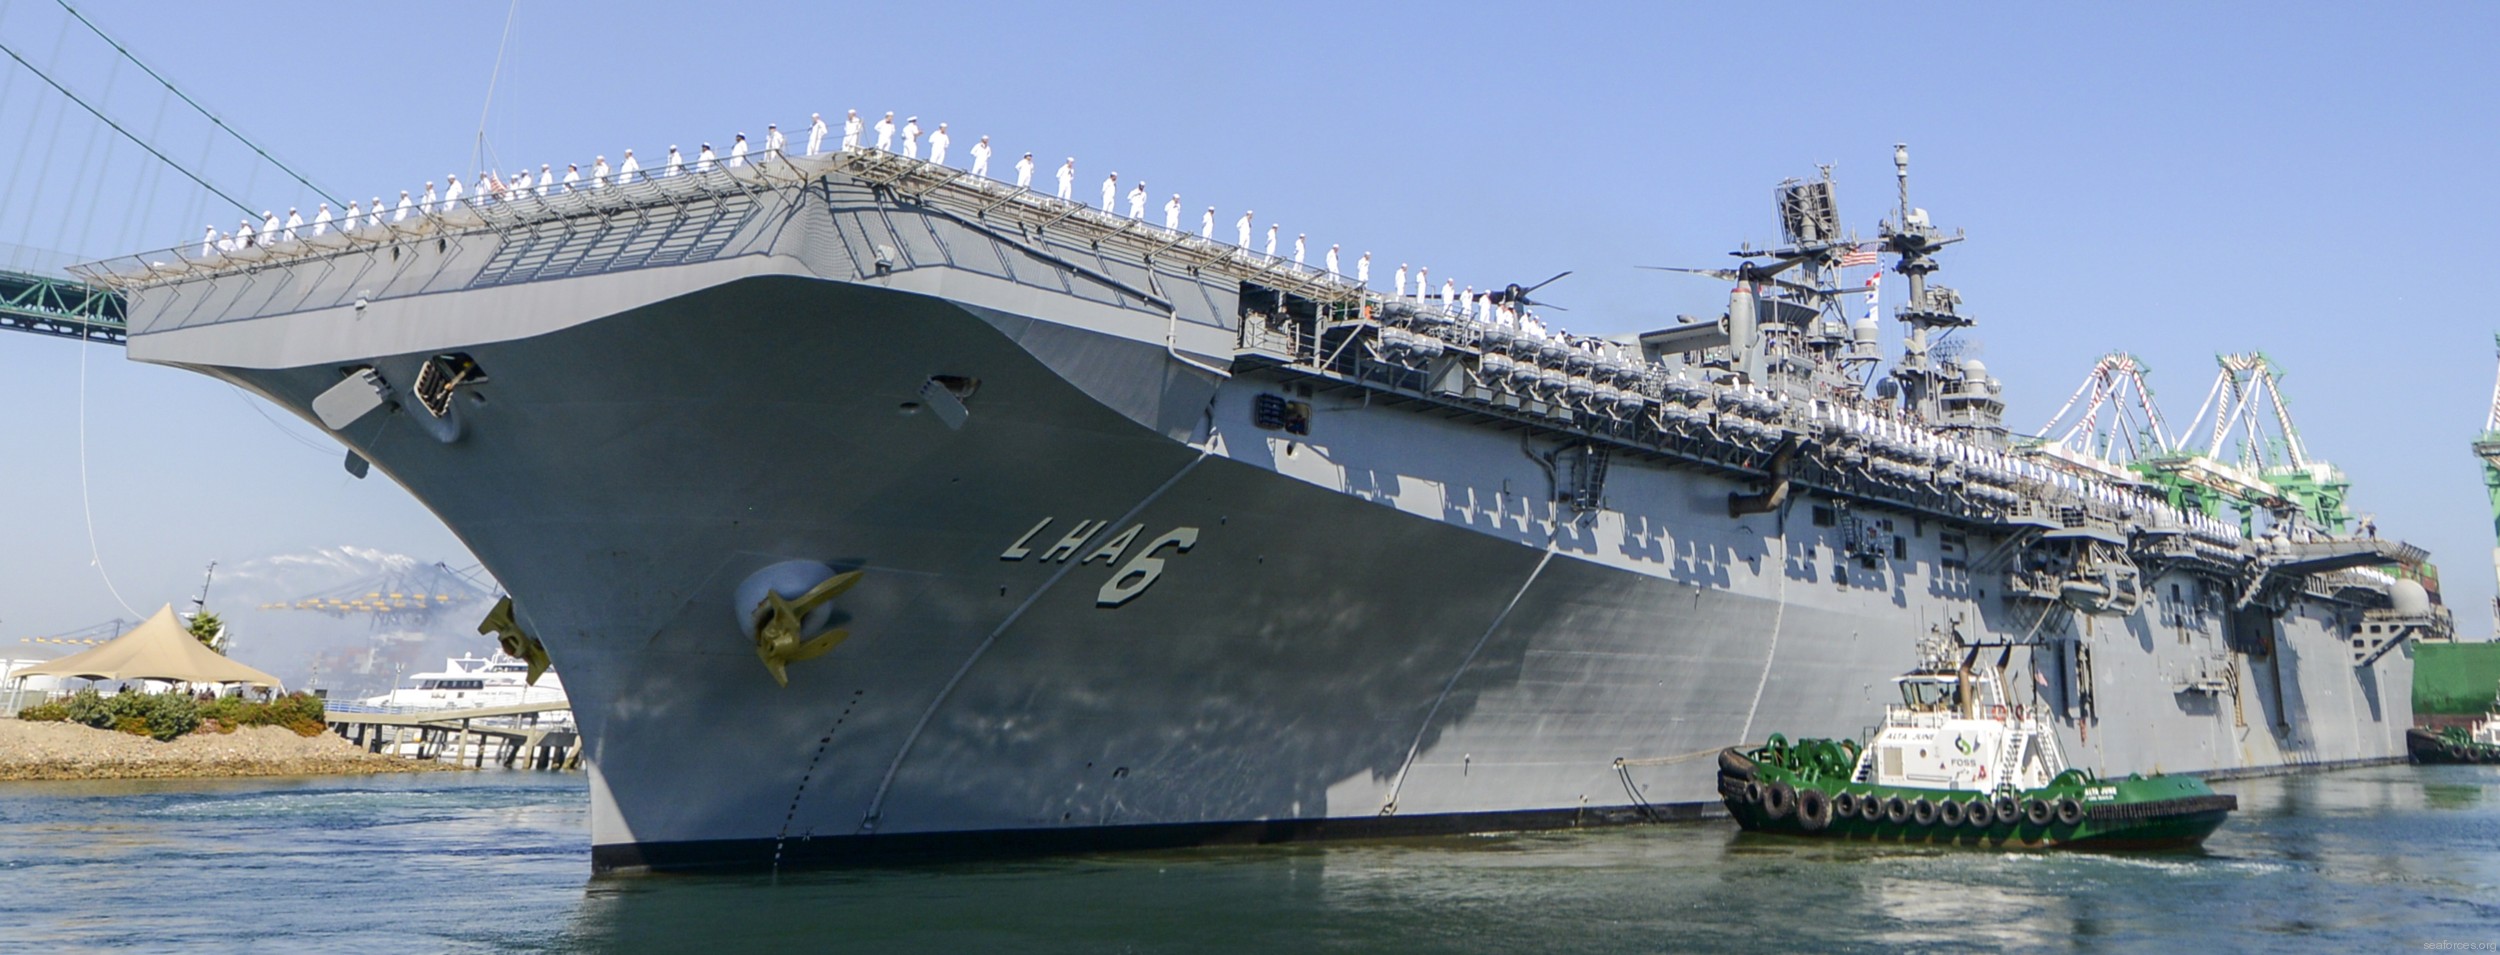 lha-6 uss america amphibious assault ship us navy 109 los angeles fleet week